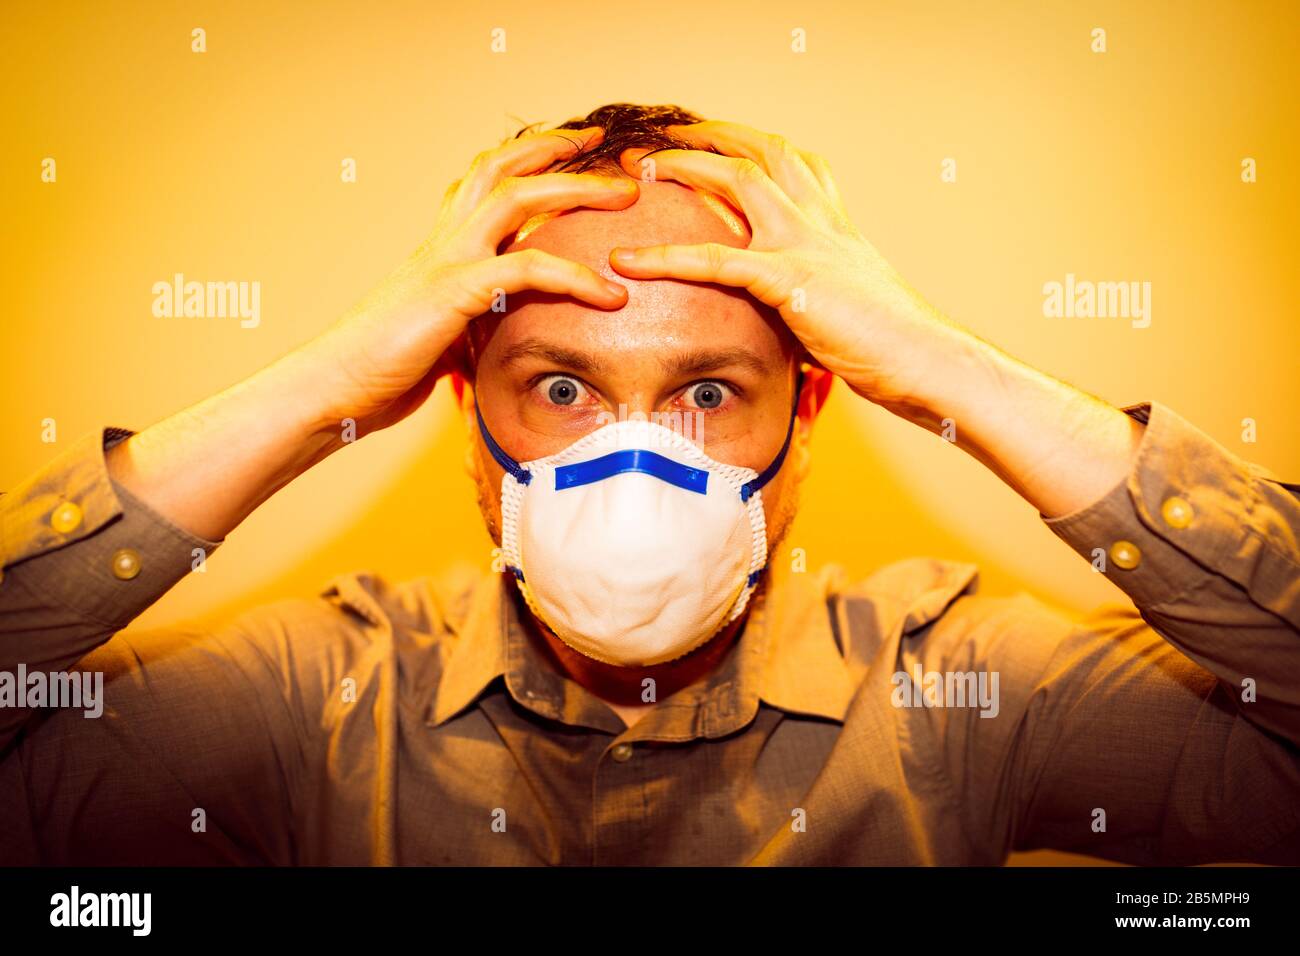 Man with real Coronavirus COVID-19 disease symptoms wears a protective mask Stock Photo